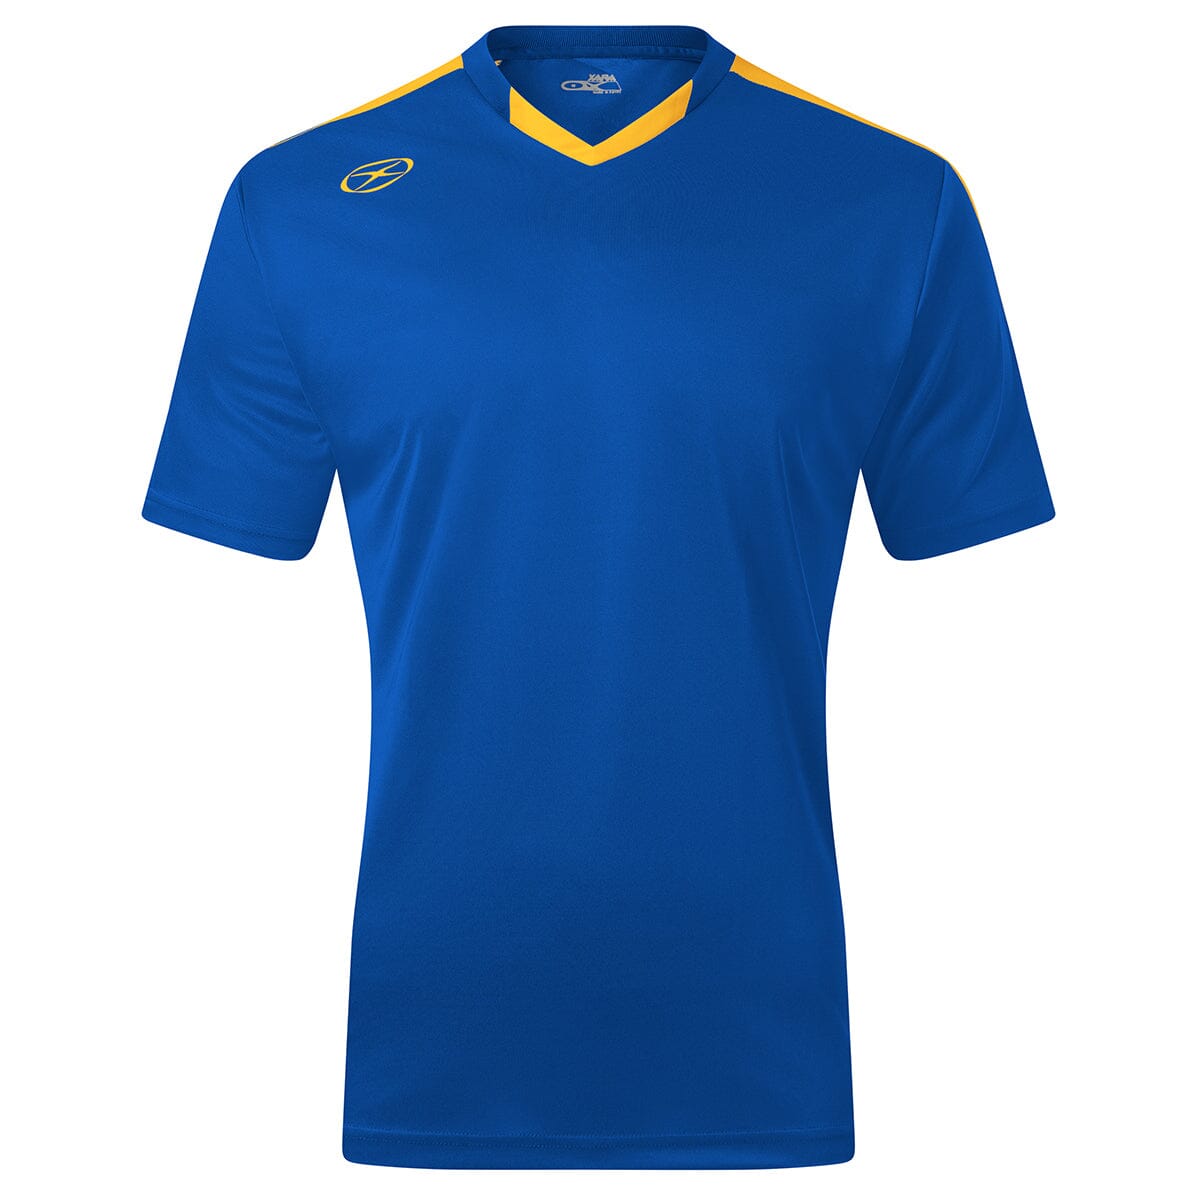 Britannia Jersey - Home Colors - Male Shirt Xara Soccer Royal/Gold Small 